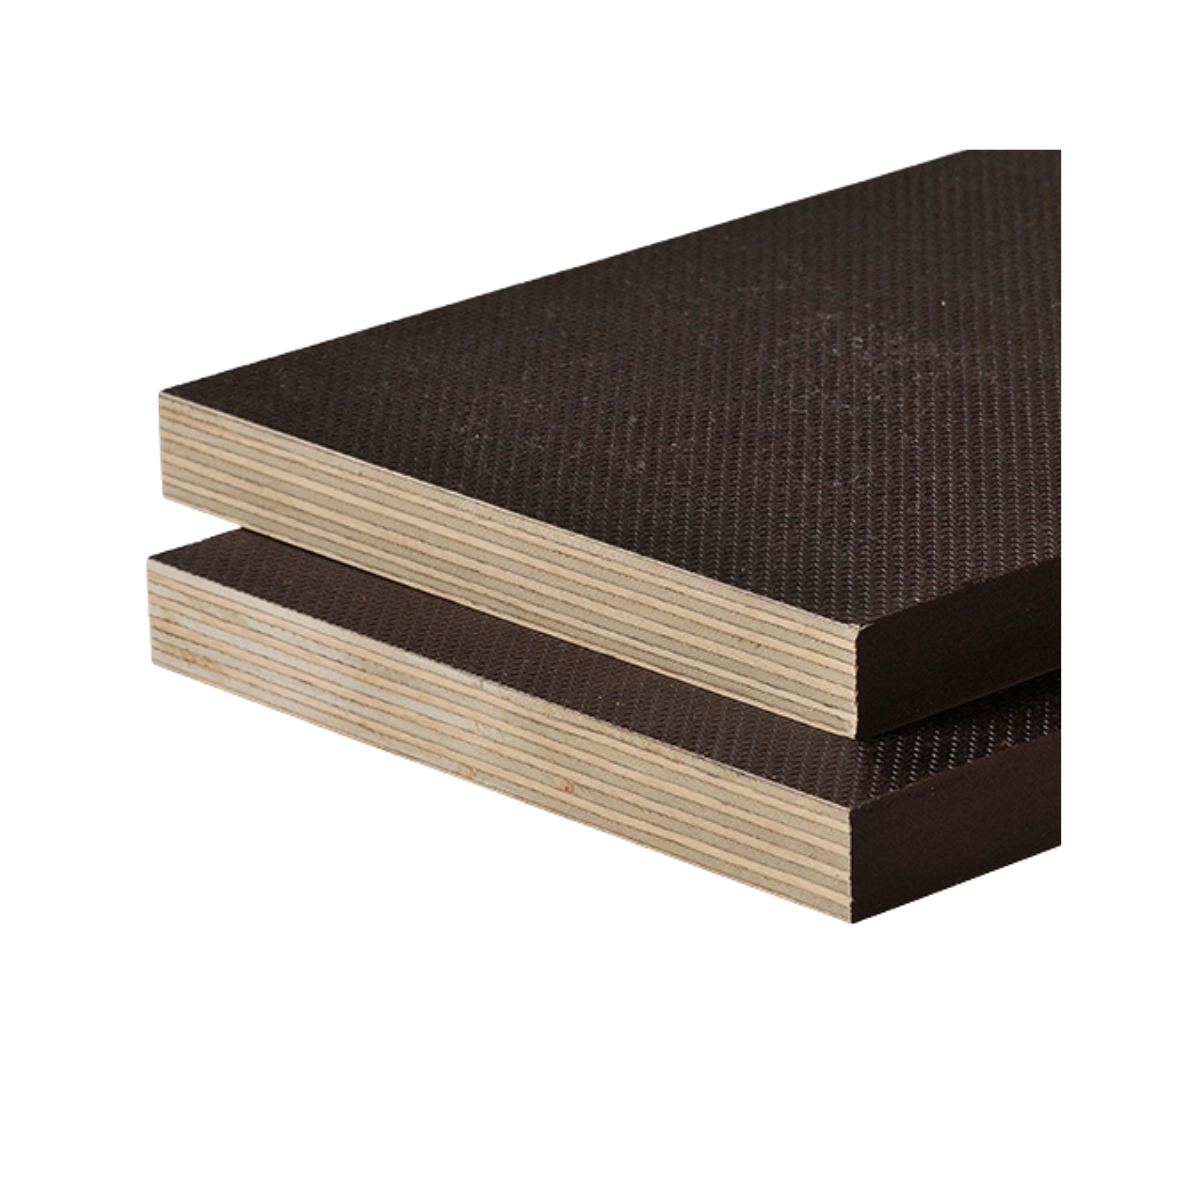 Antiskid playwood - Anti-slip TEGO formwork plywood 9 mm thickness, 1250 x 2500 mm class B, https:maxbau.ro